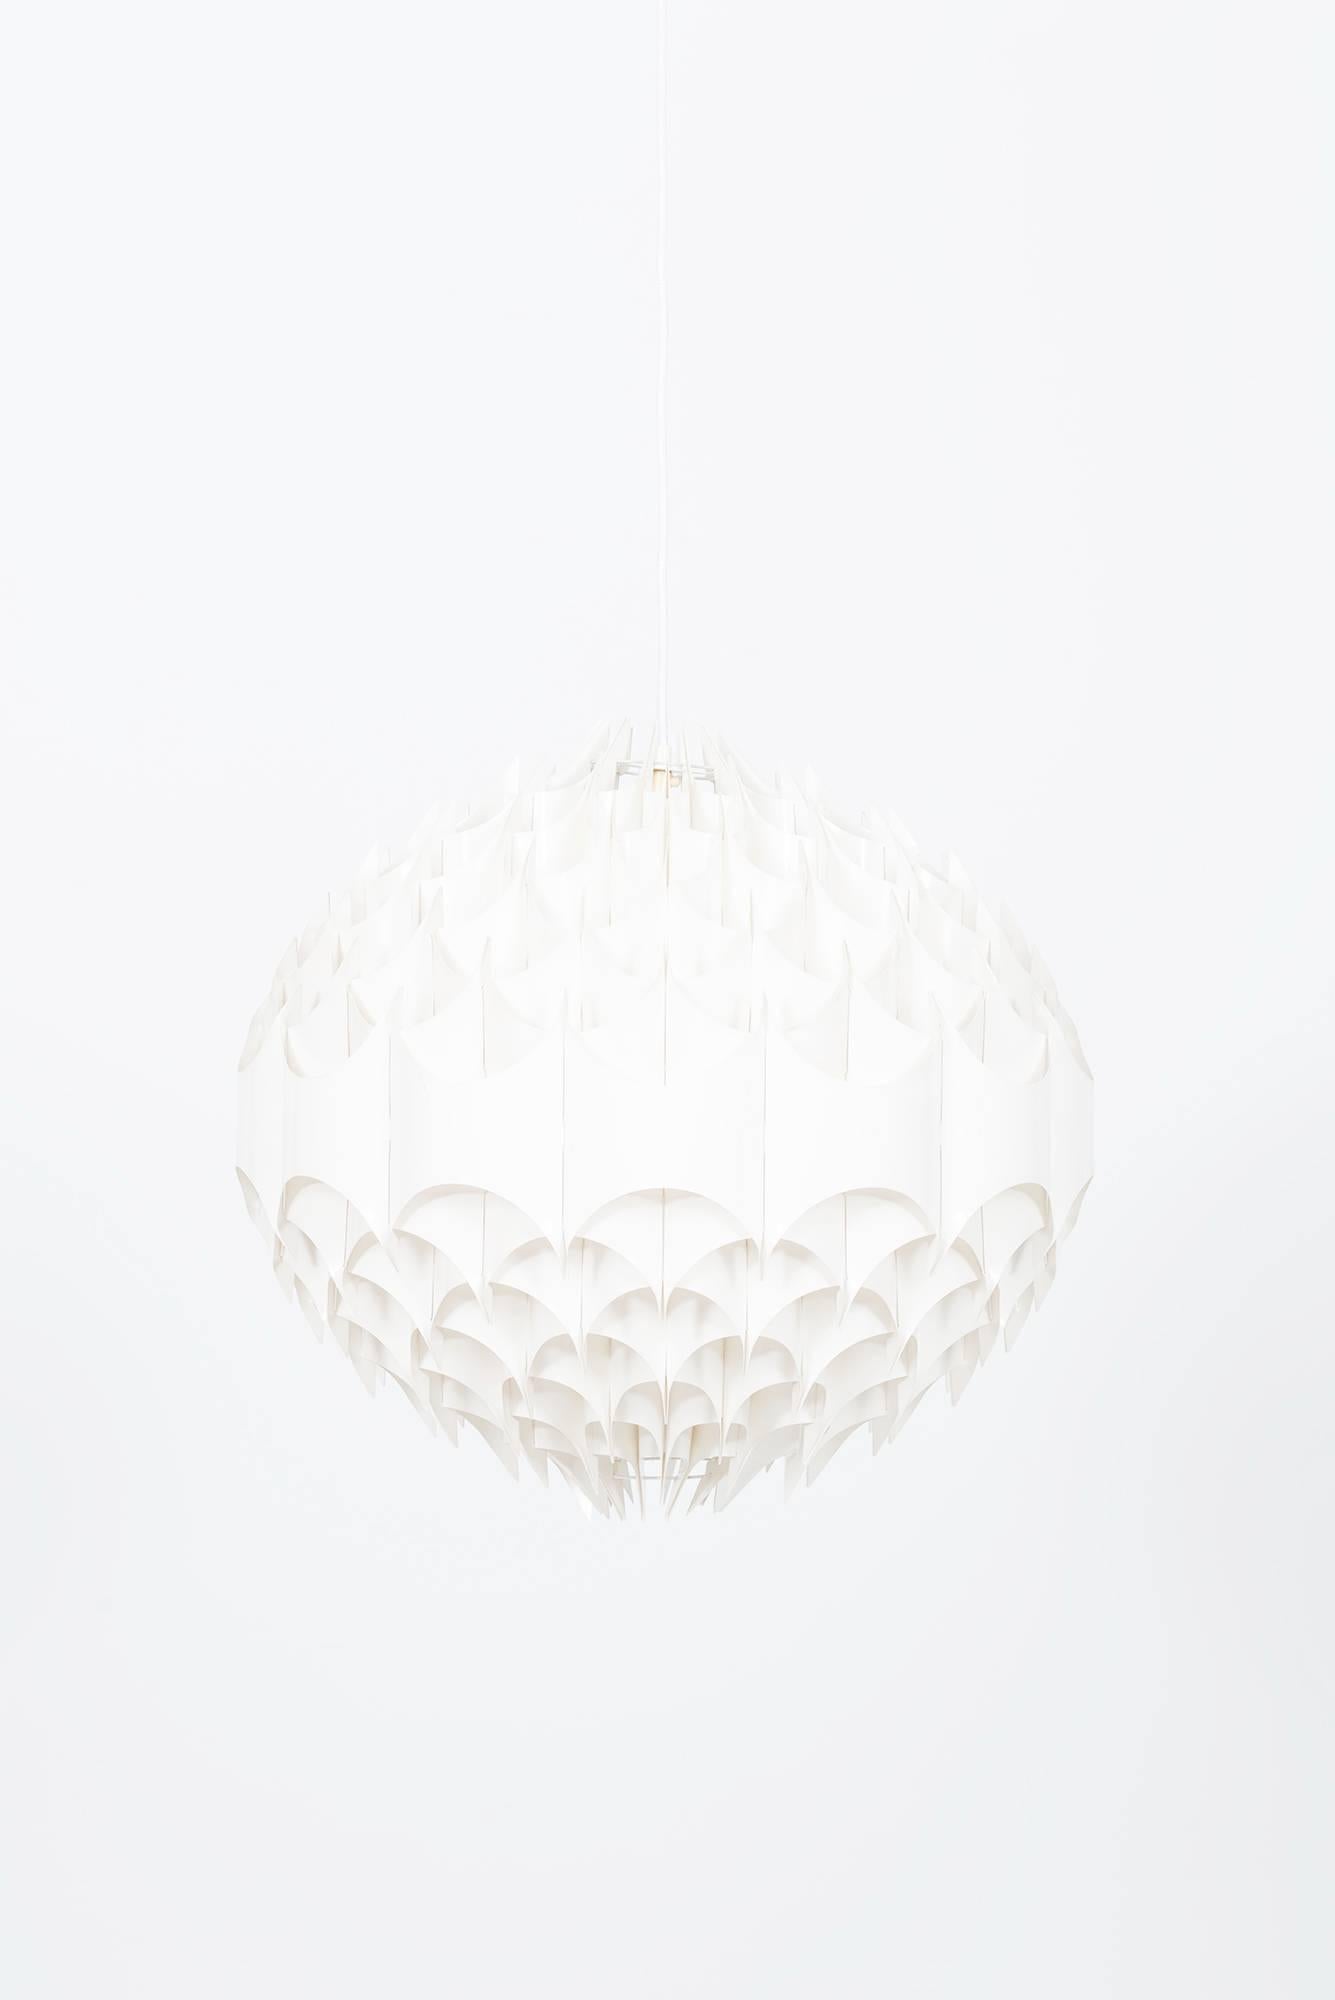 Mid-20th Century Havlova Milanda ceiling lamp model Rhythmic produced by Vest in Austria